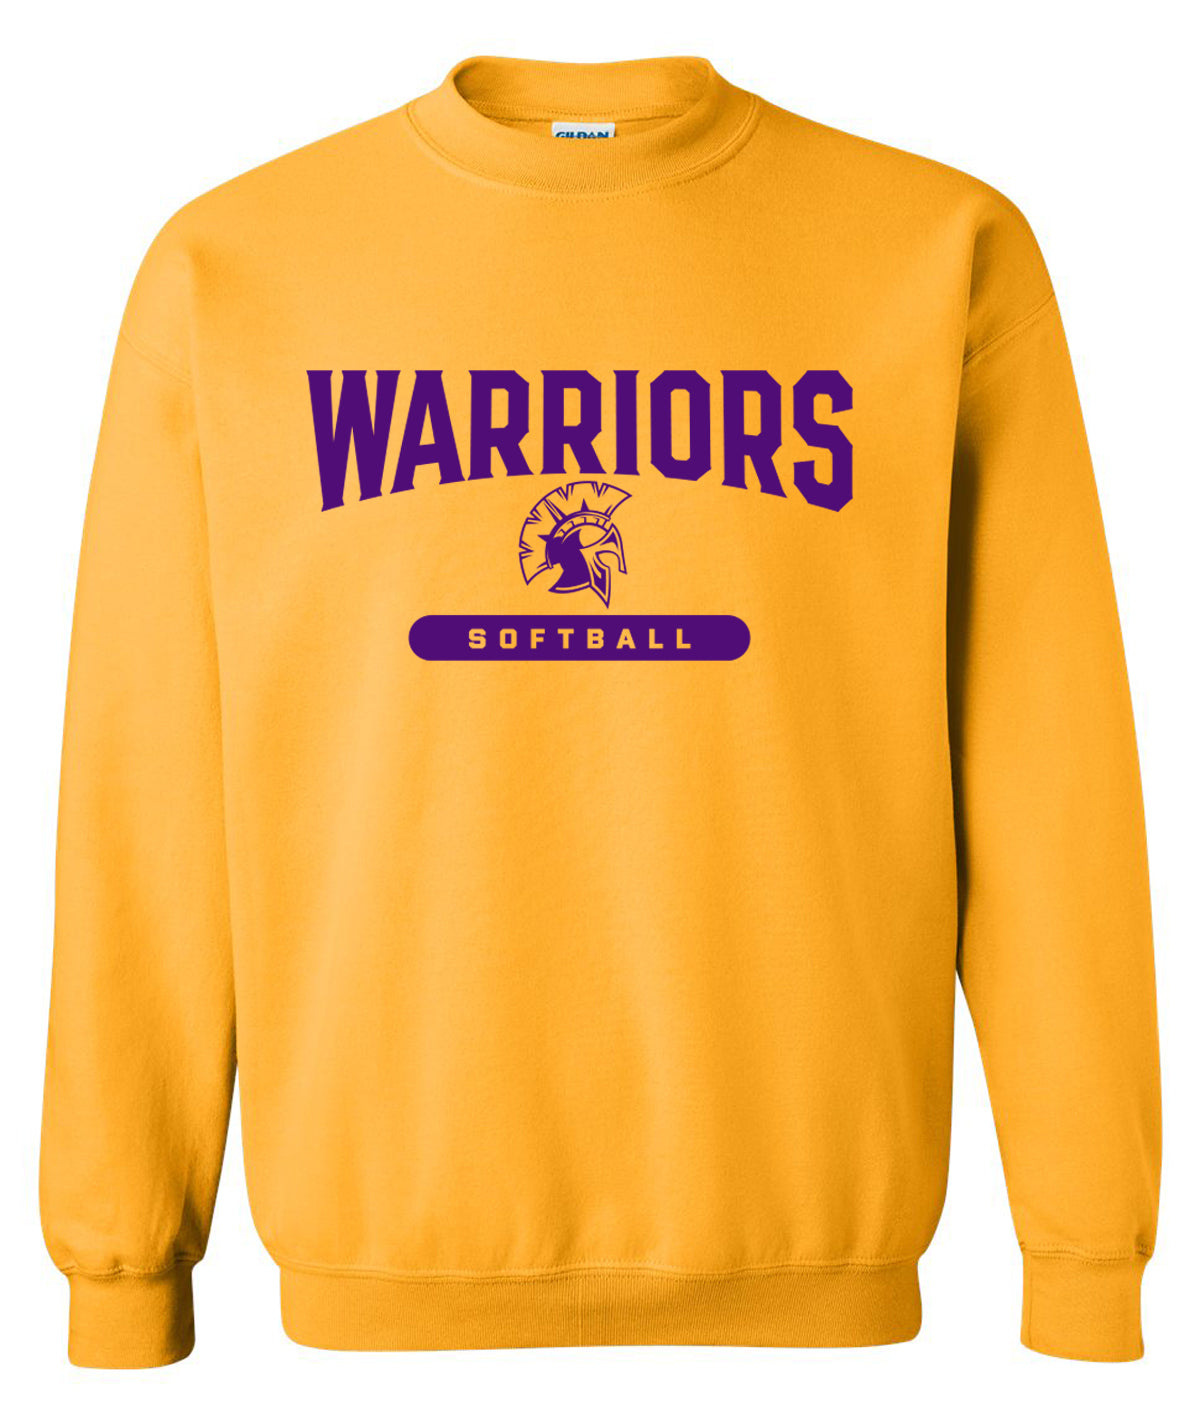 Warriors Softball Crewneck Sweatshirt